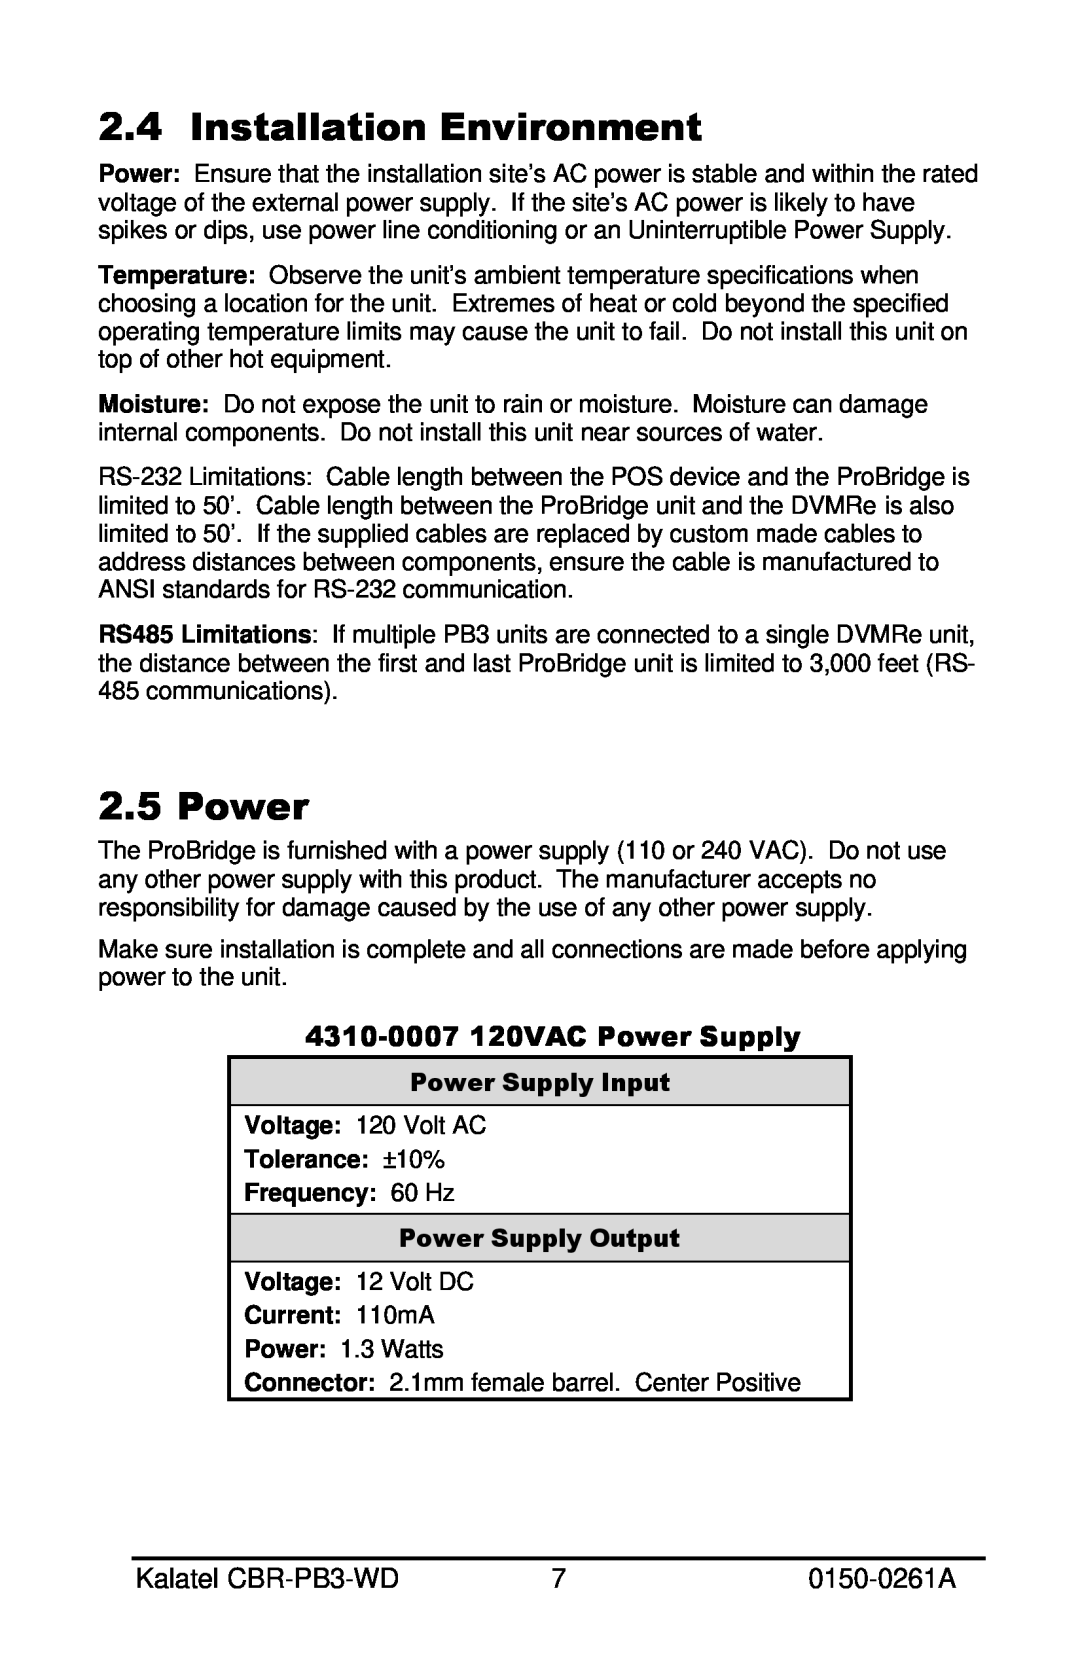 GE CBR-PB3-WD installation manual Installation Environment, 4310-0007 120VAC Power Supply 